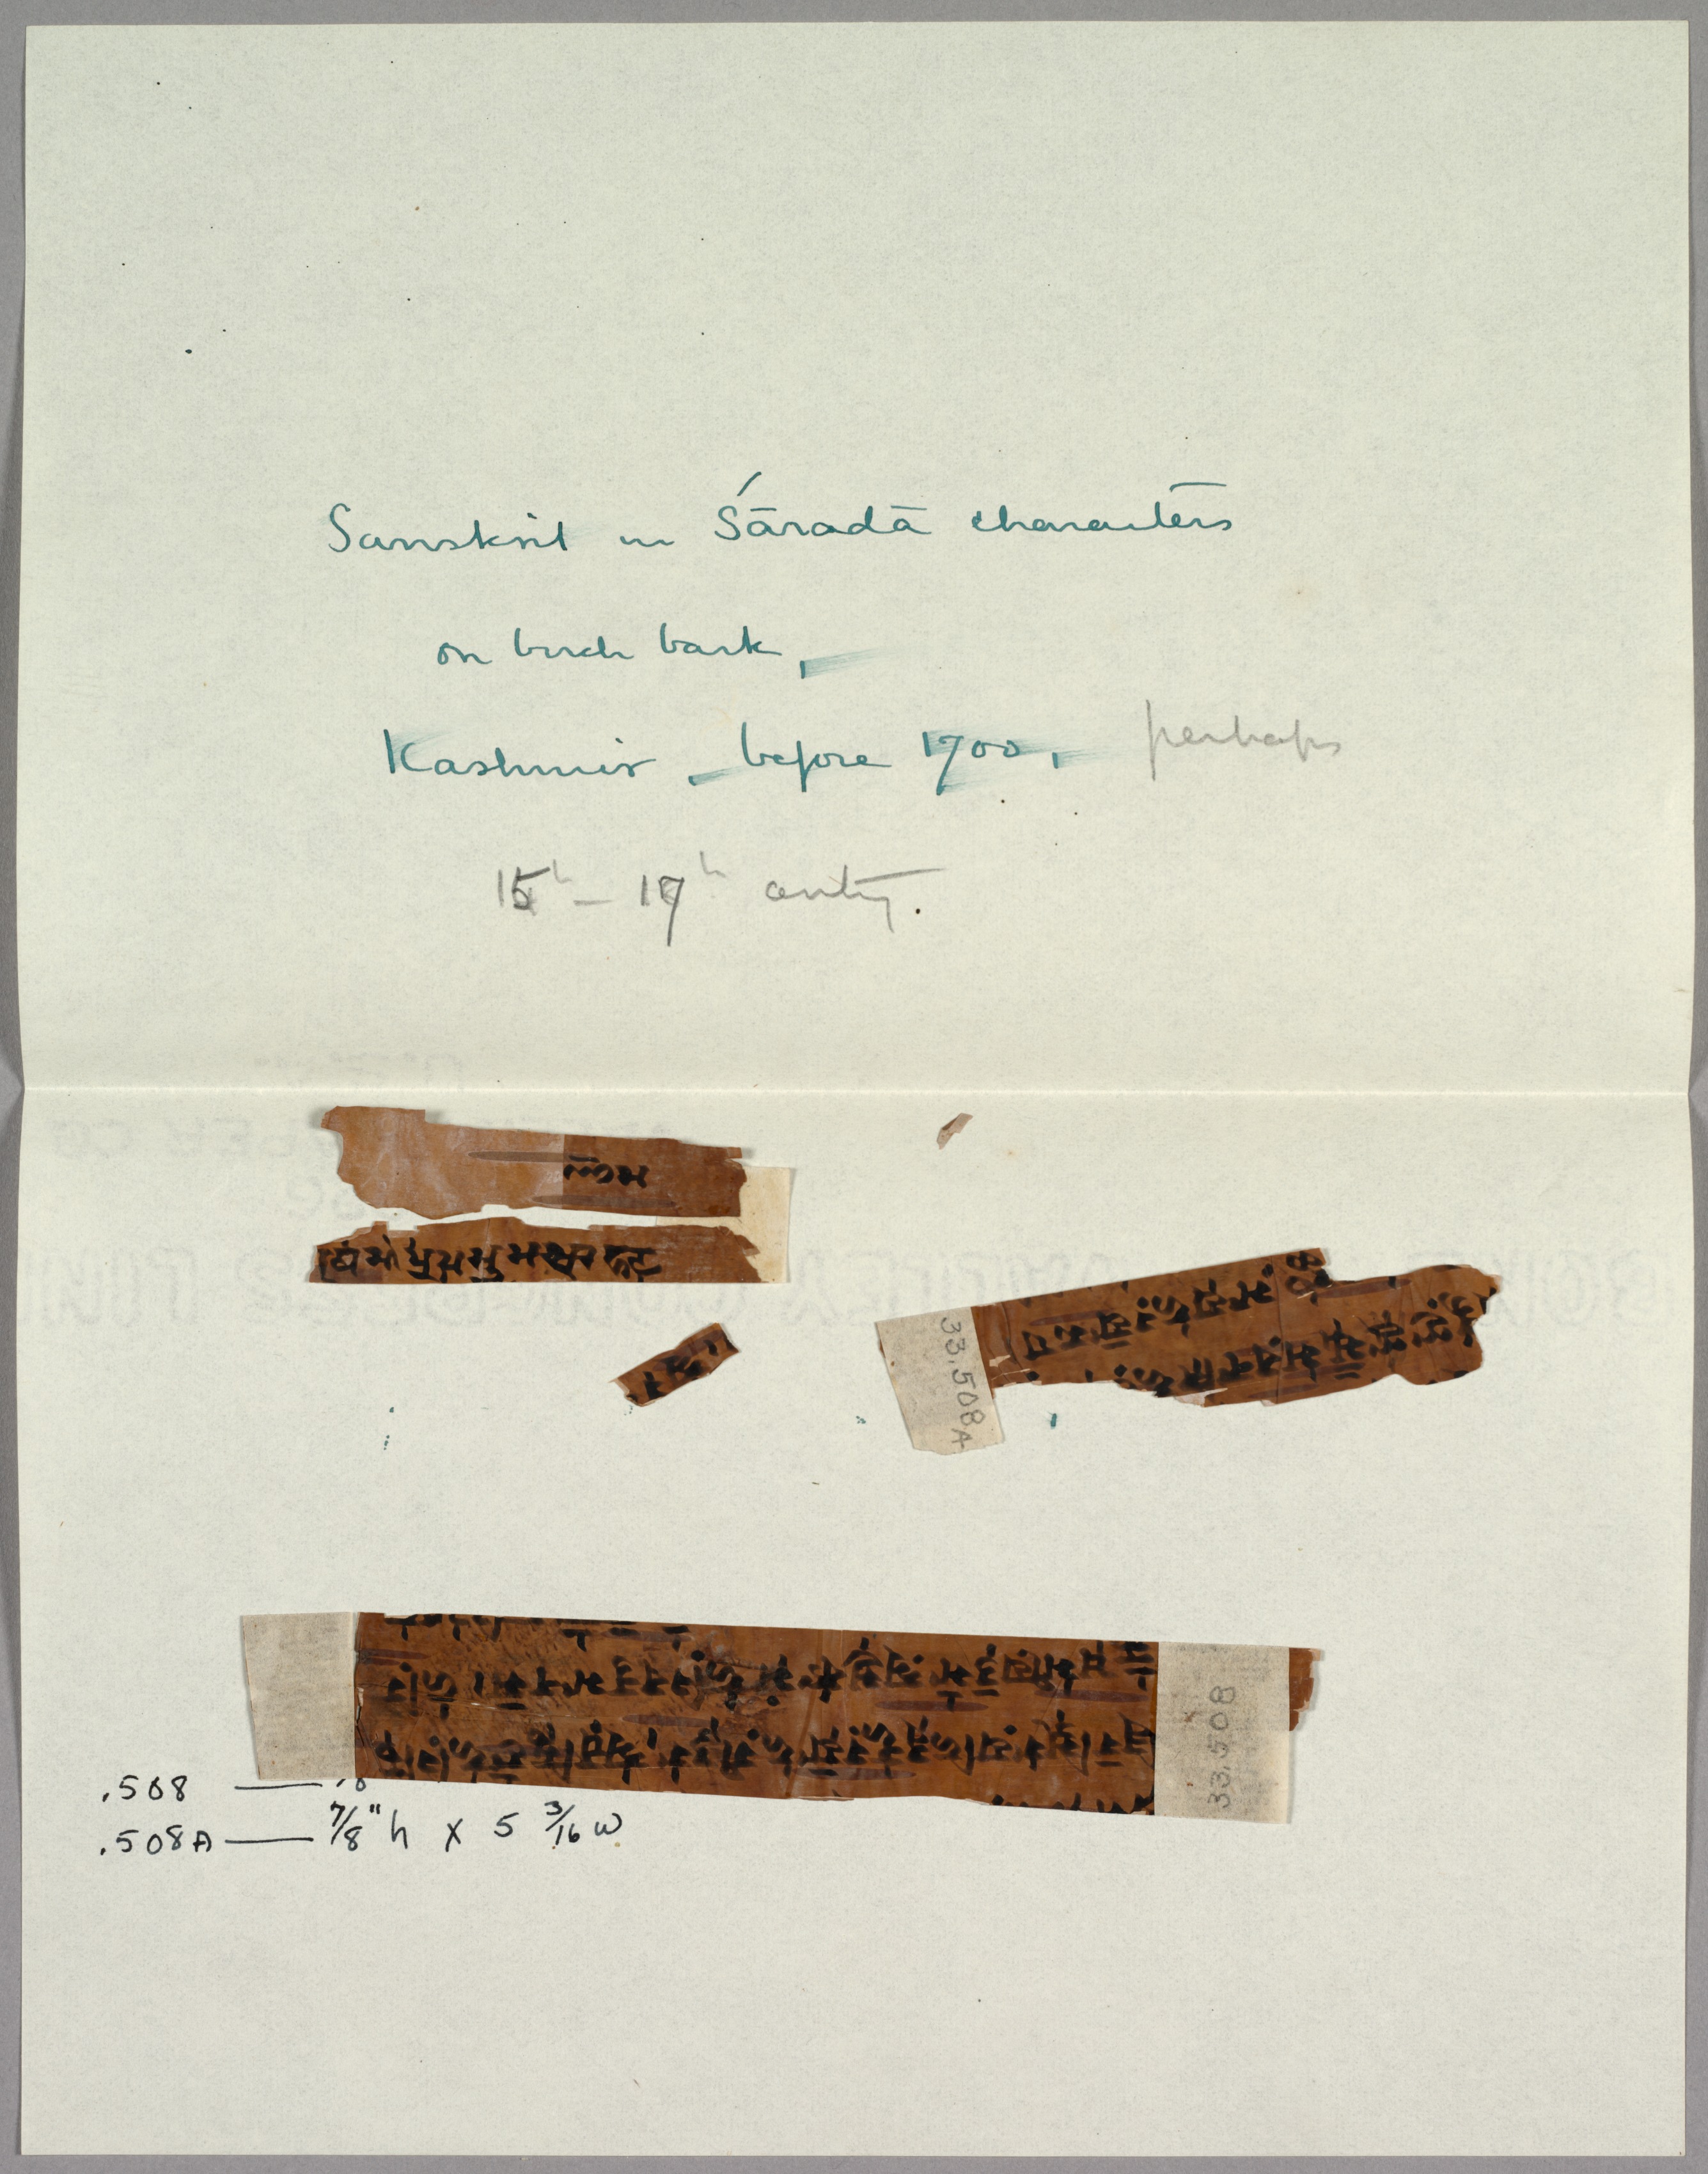 Two Fragments of Bark with Sanskrit